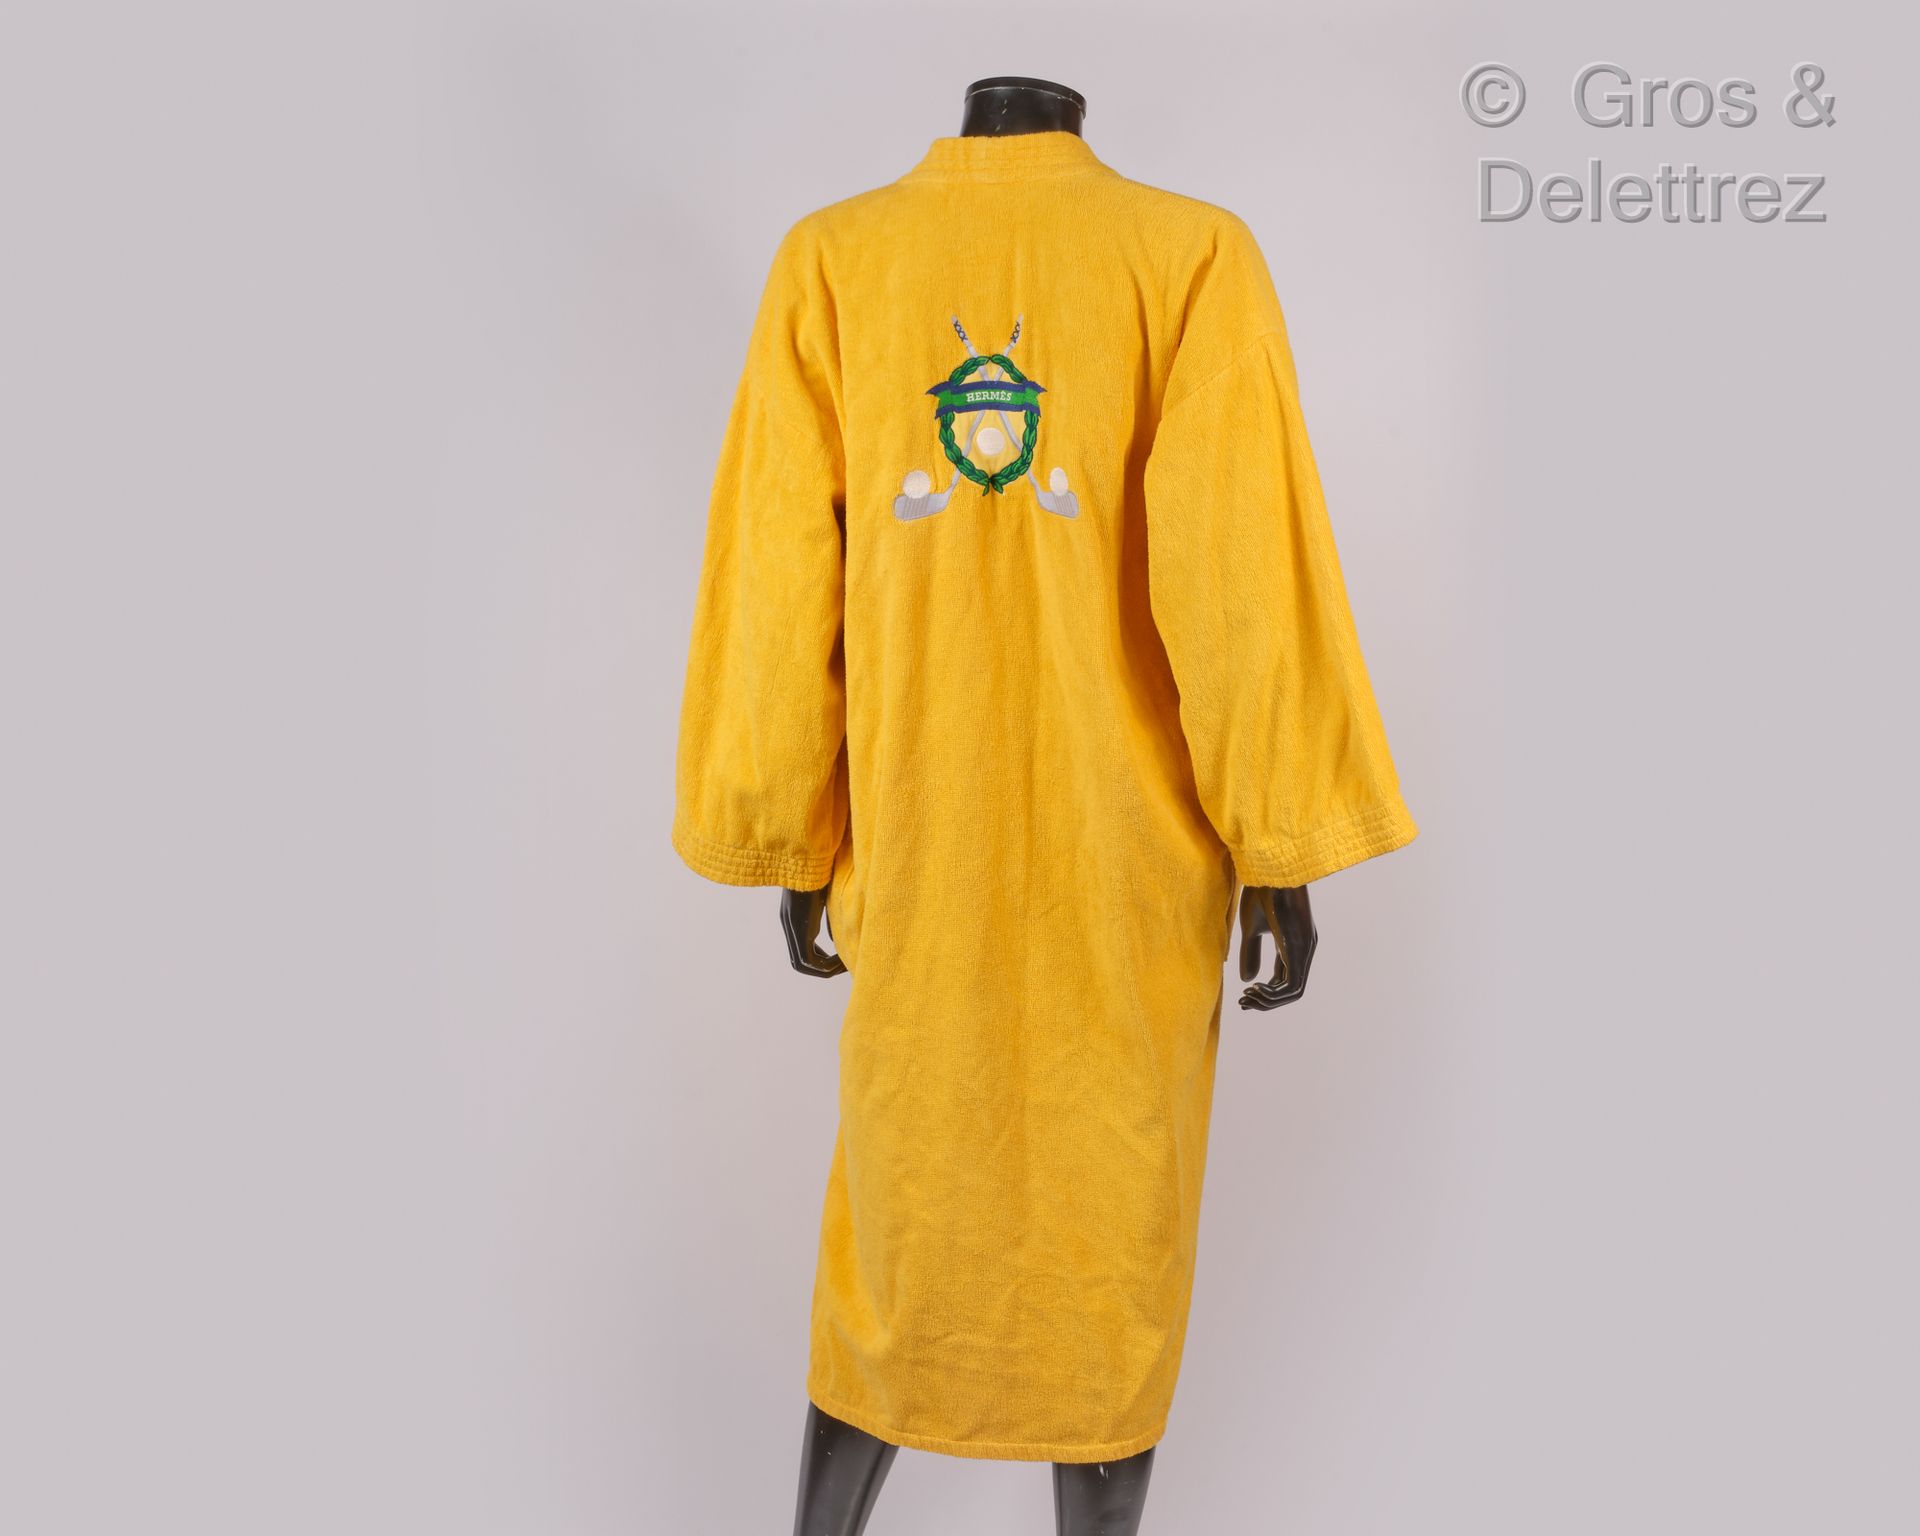 HERMÈS Paris made in France 绣有高尔夫图案的黄色纯棉毛圈沐浴套装，包括一件浴袍、一条浴巾和一条客用毛巾。(缺失的皮带)。